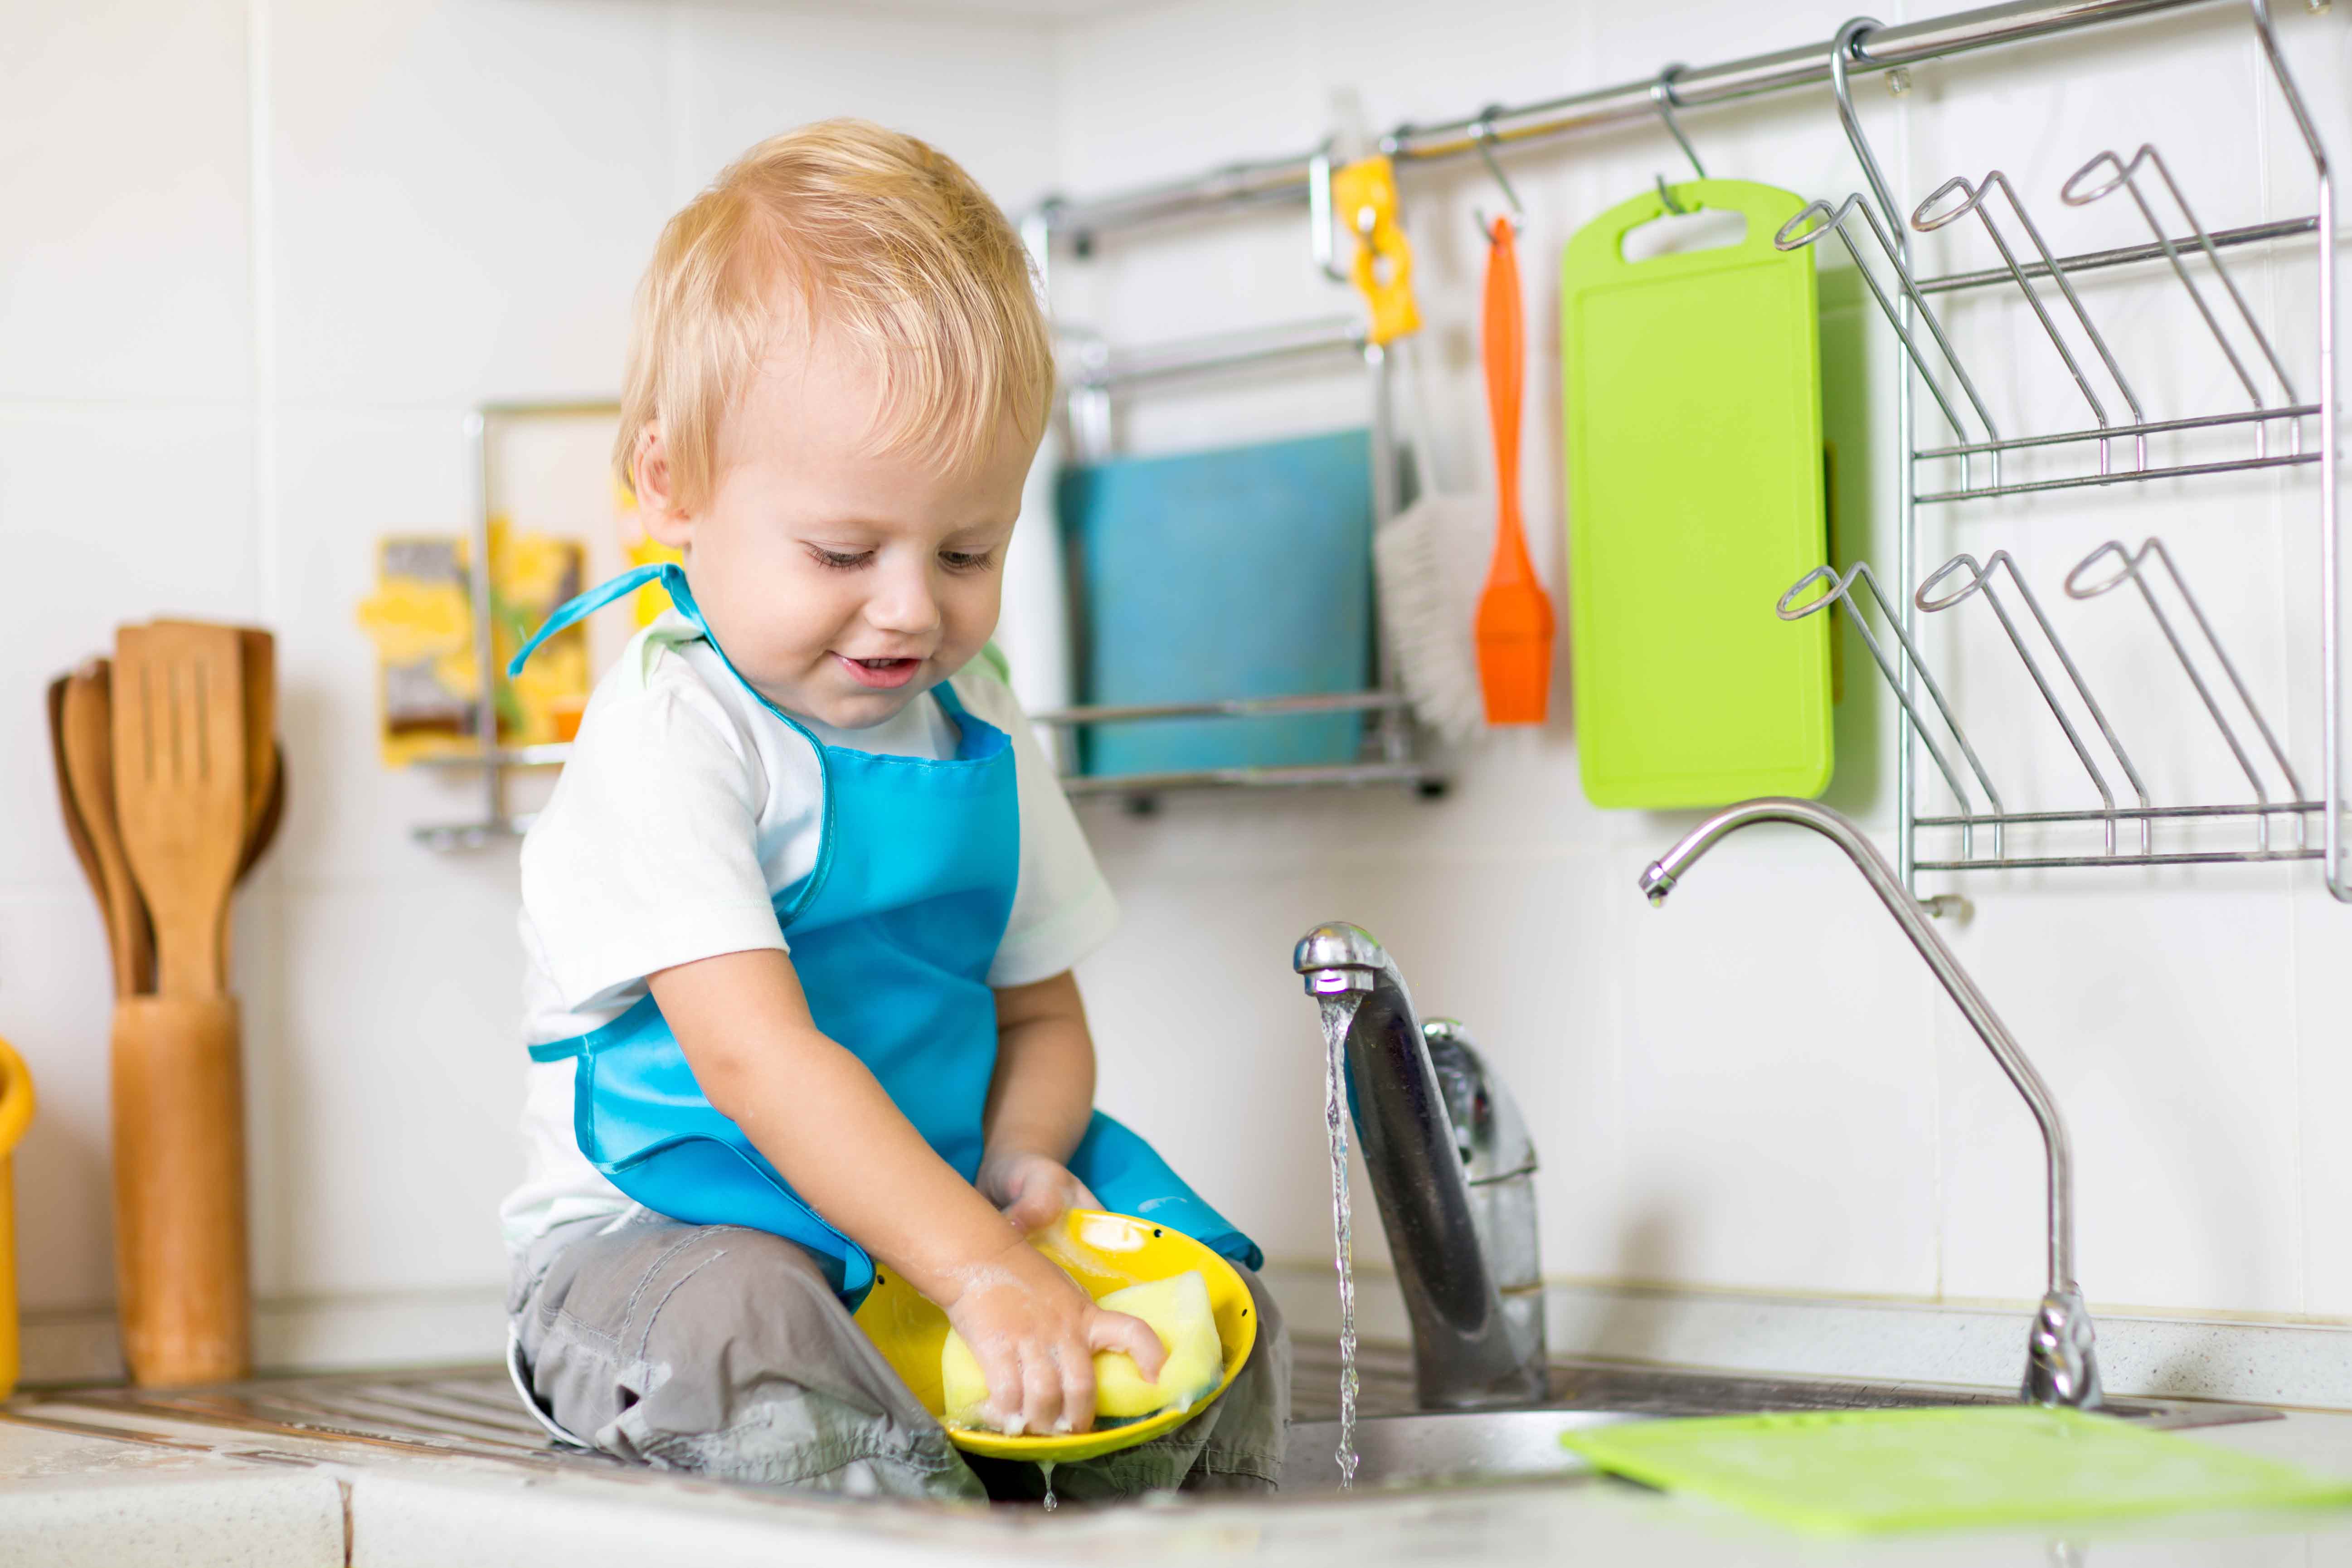 Washing Baby Feeding Supplies. Toddler washes dishes - Feeding My Kid5188 x 3459